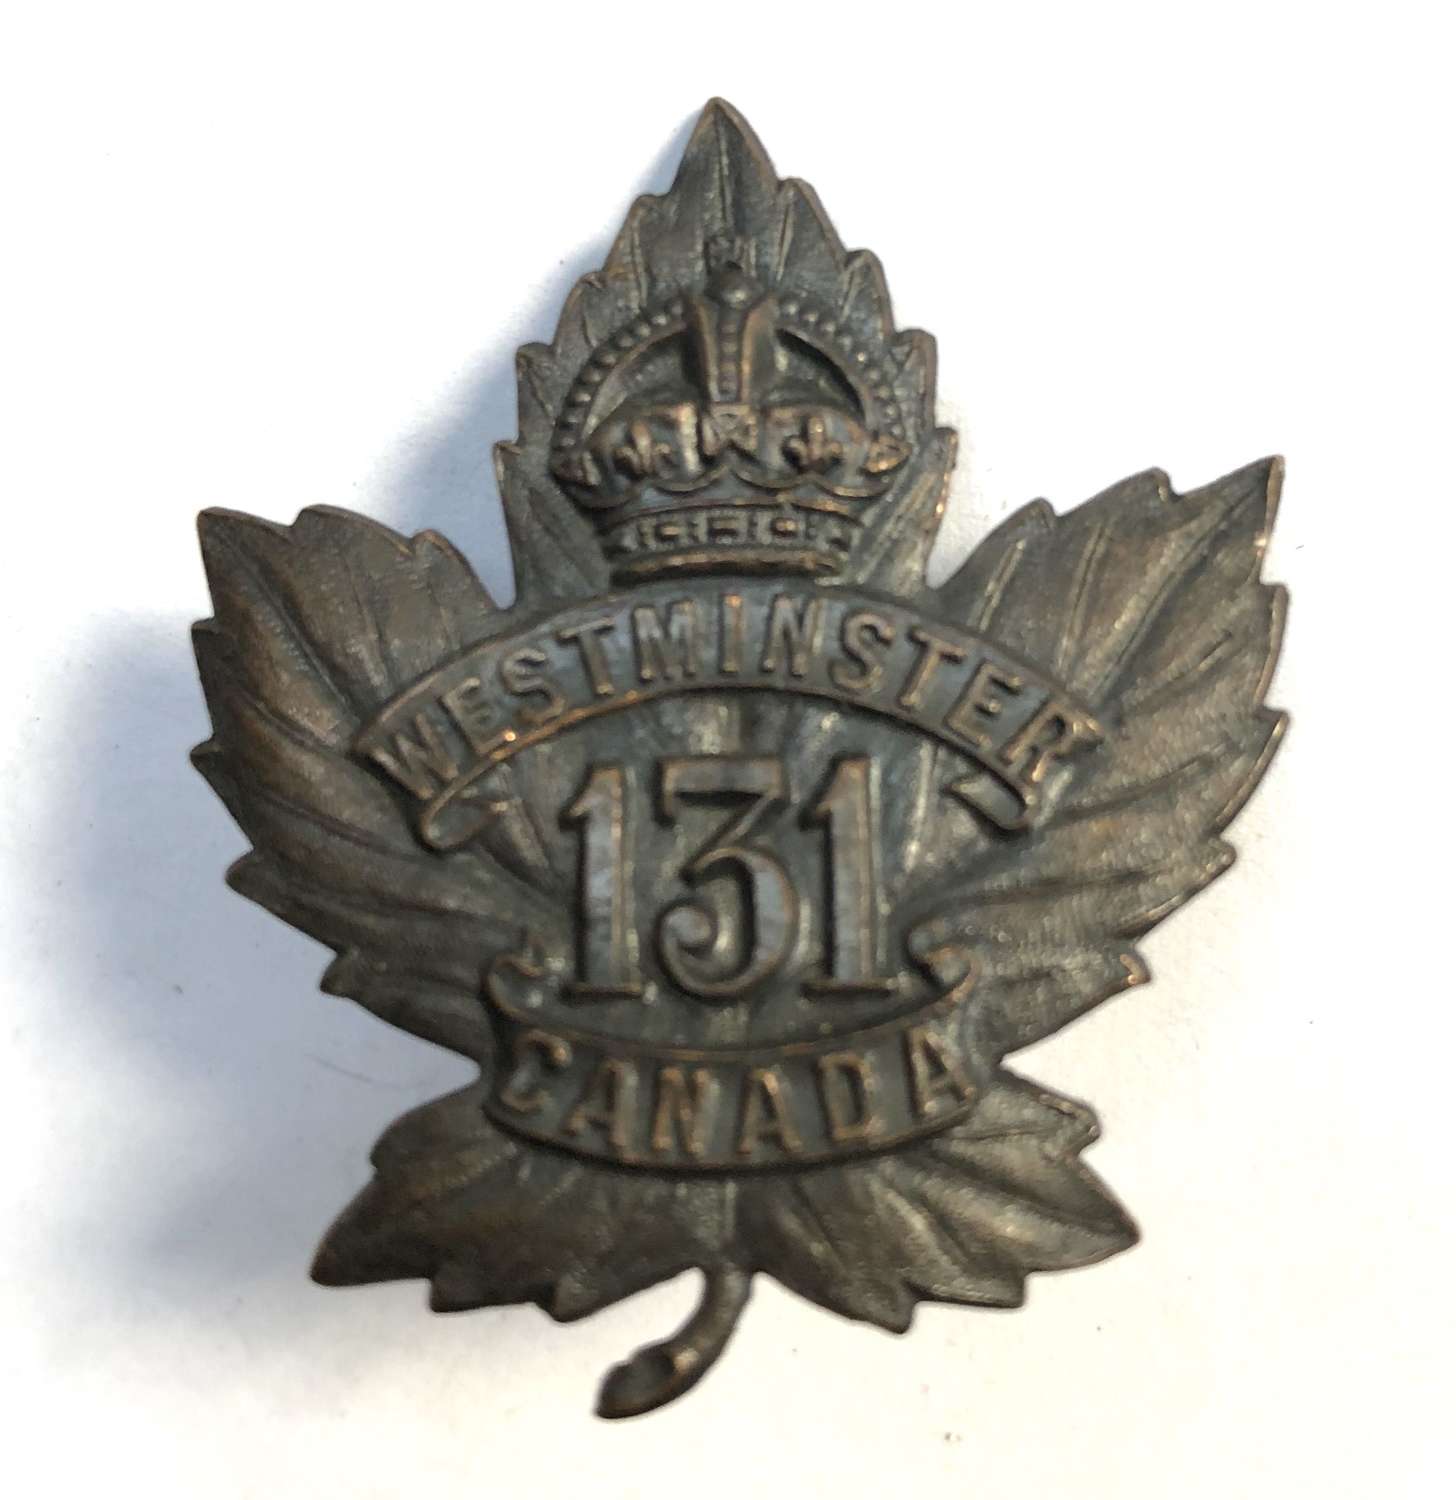 Canada. 131st (Westminster) Bn CEF WWI cap badge by O.B. Allan